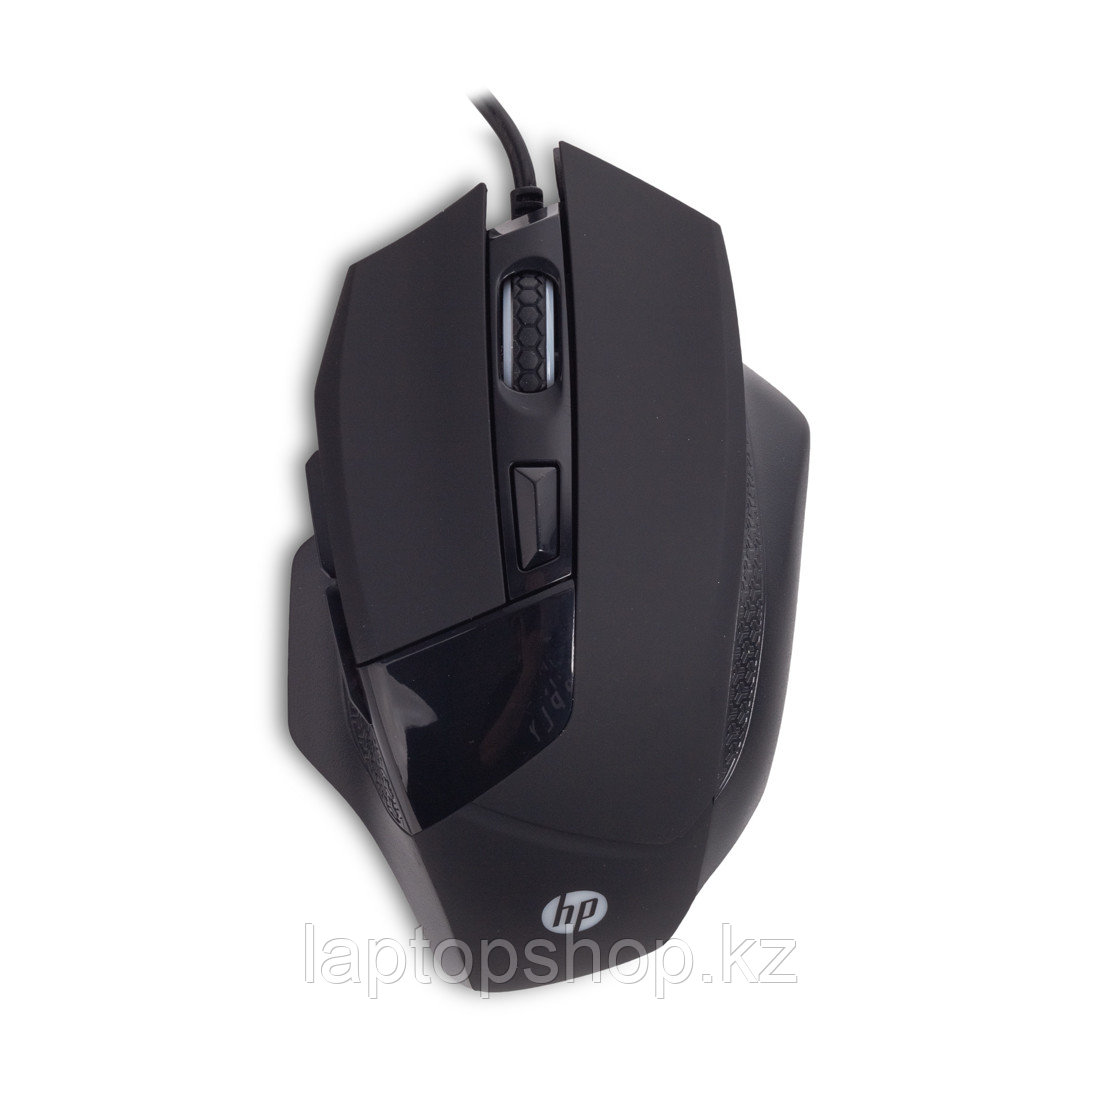 Компьютерная мышь HP G200, фото 1